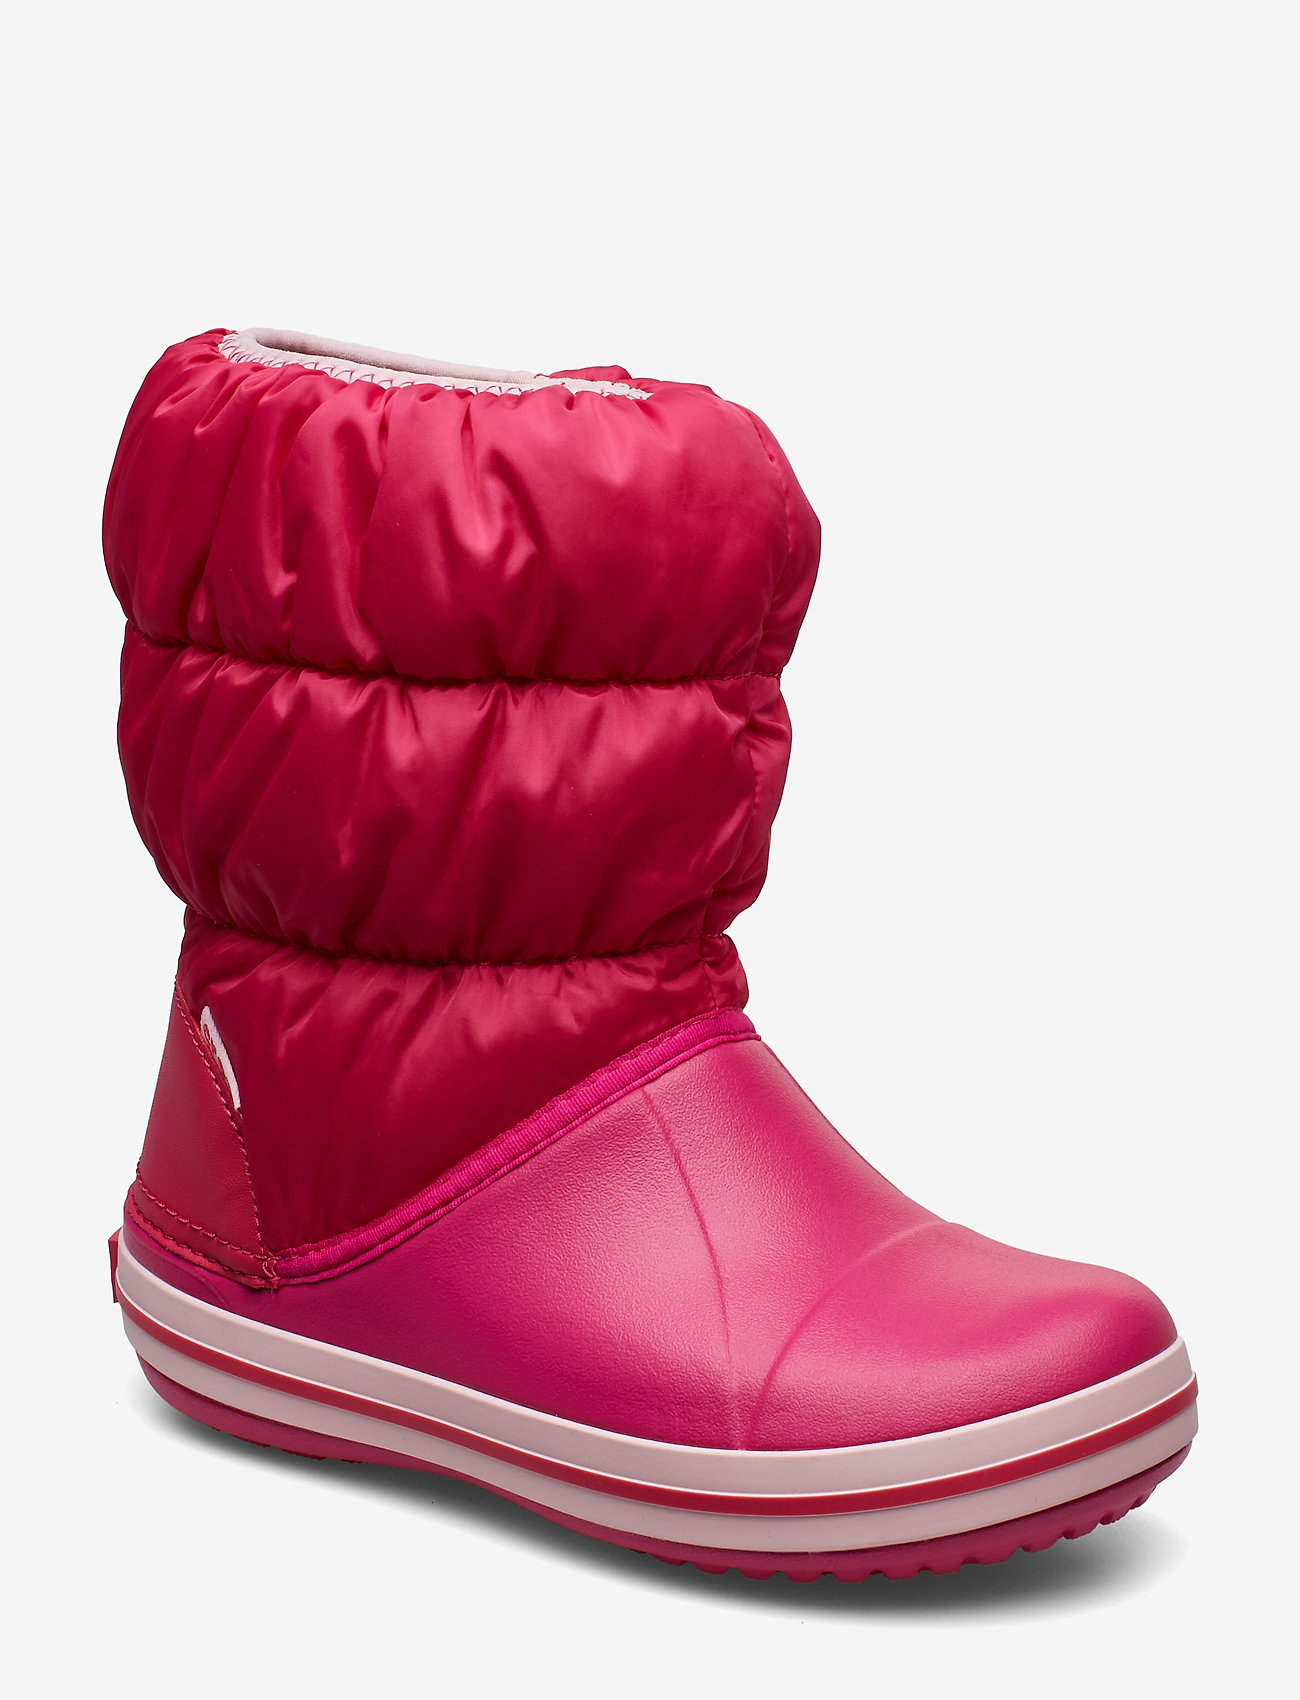 Winter Puff Boot Kids (Candy Pink) (27 